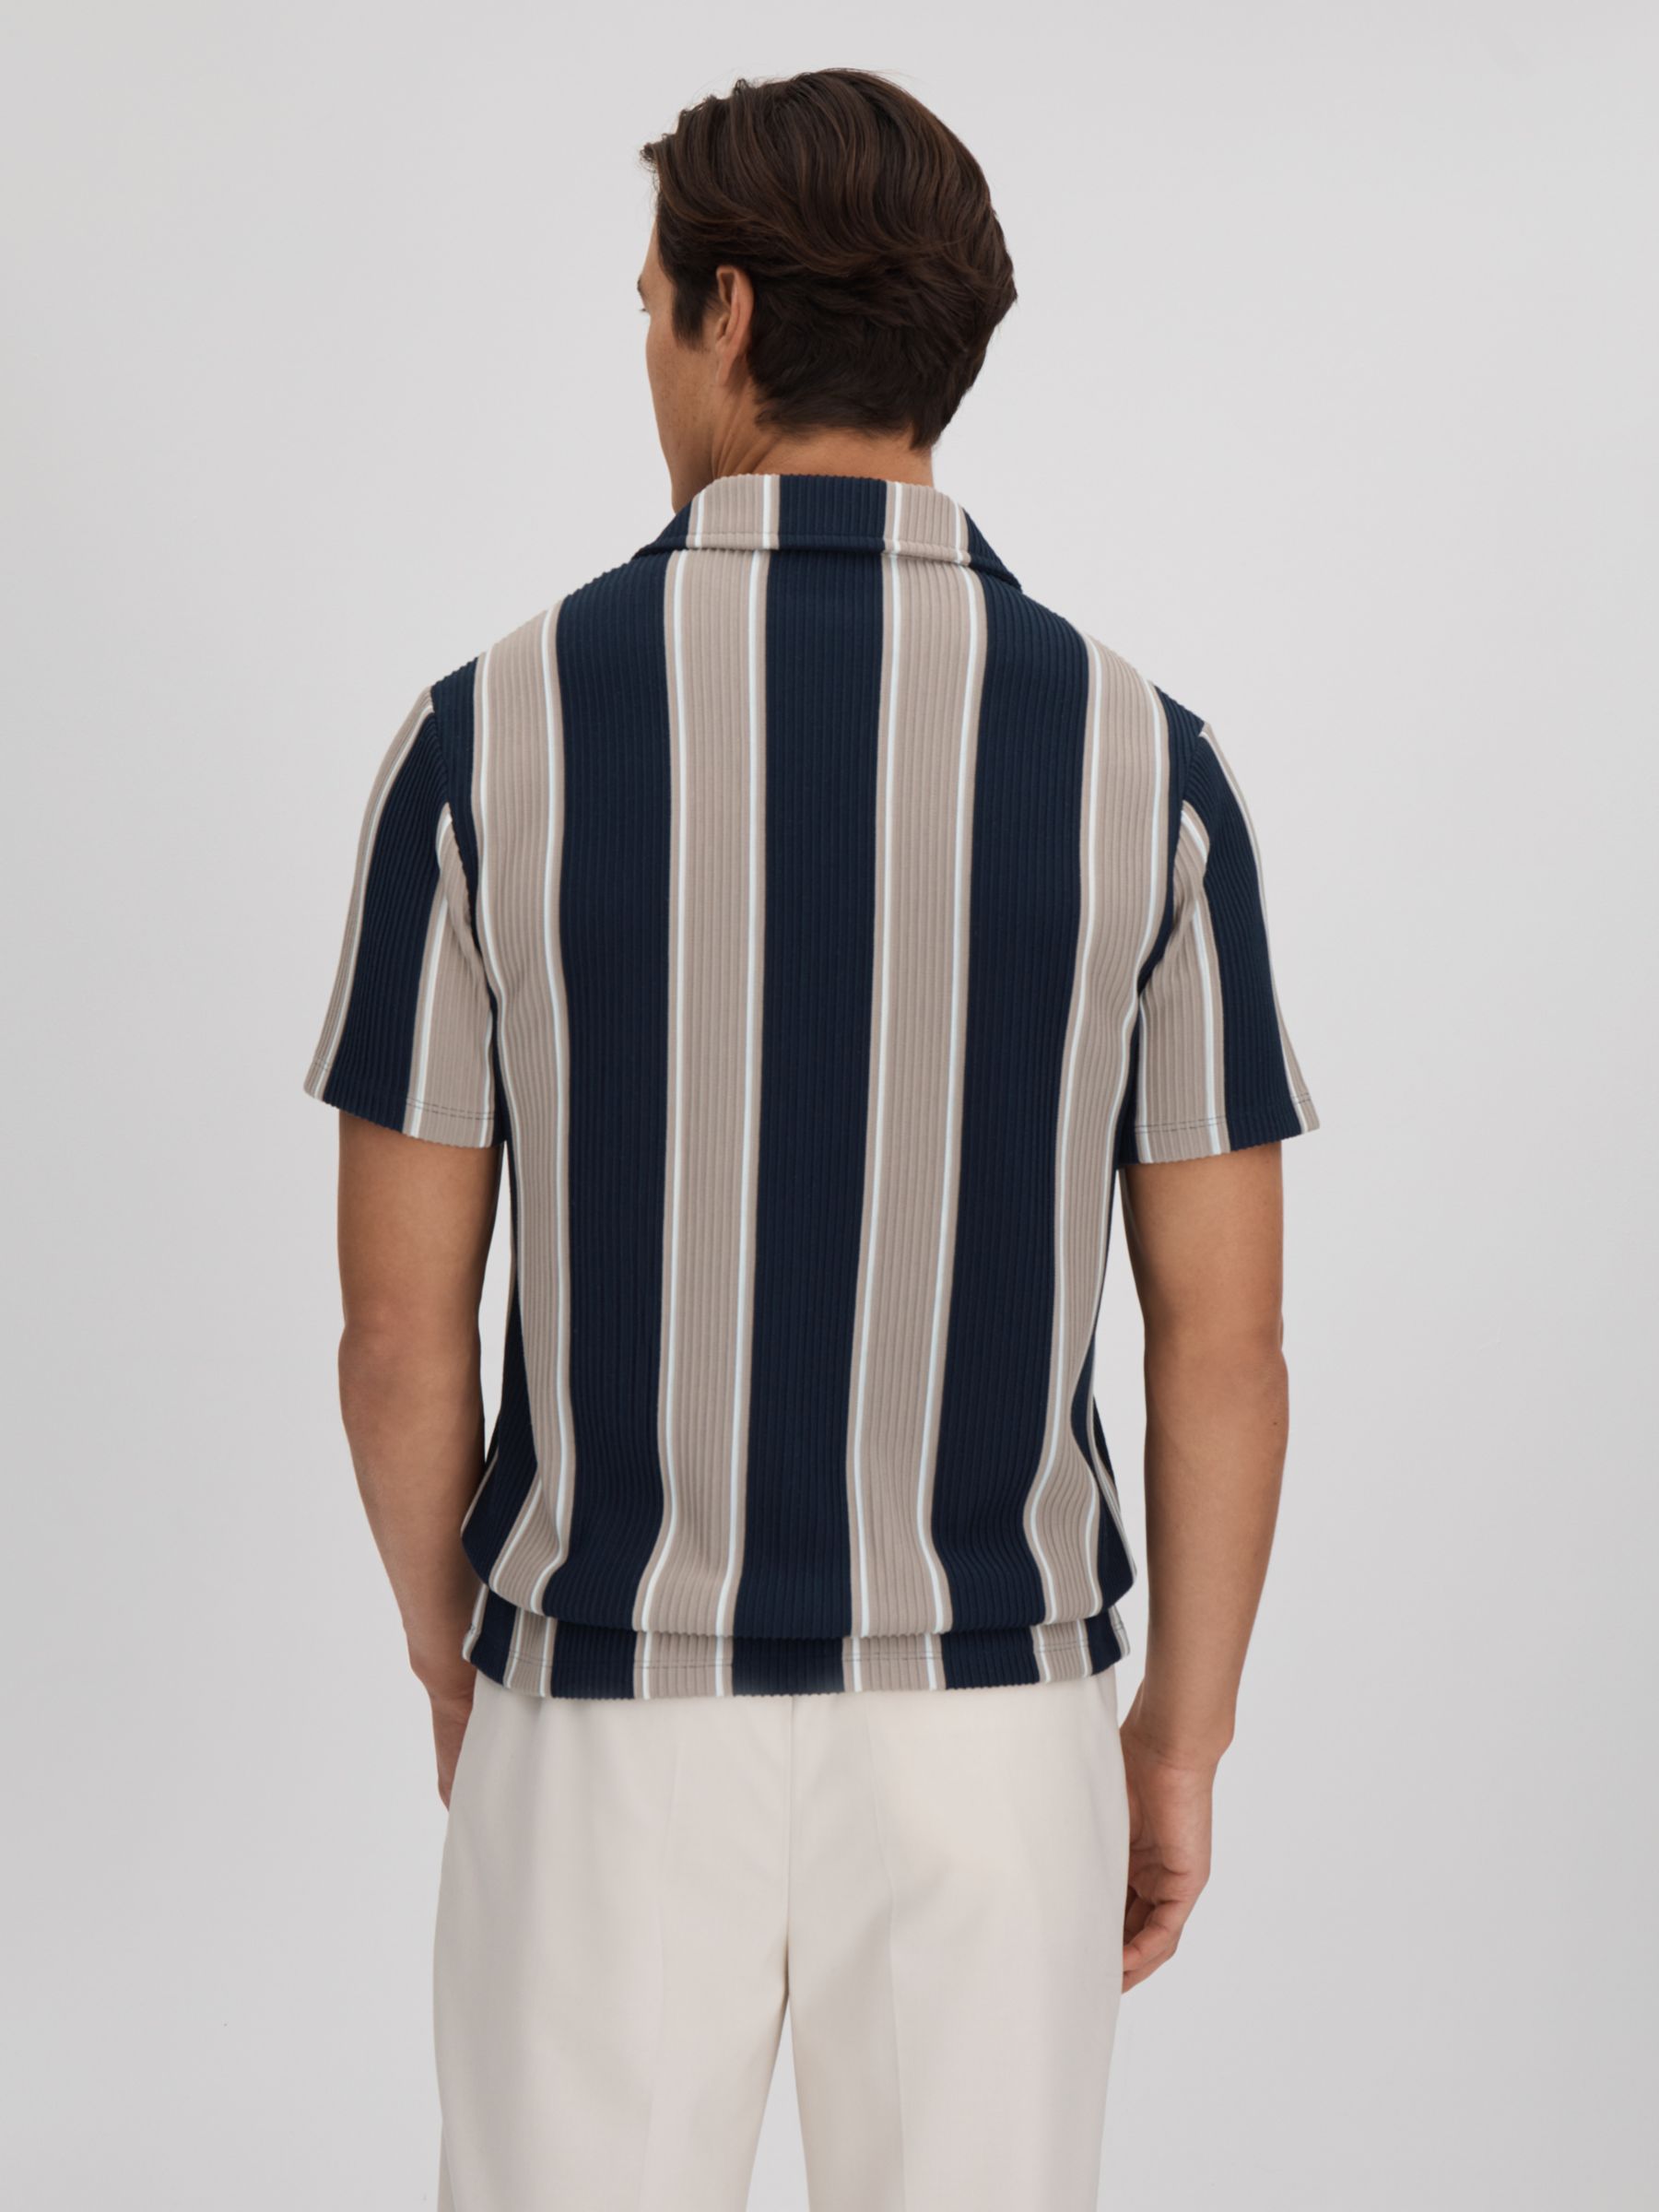 Reiss Alton Short Sleeve Textured Stripe Shirt, Navy/Camel, XL